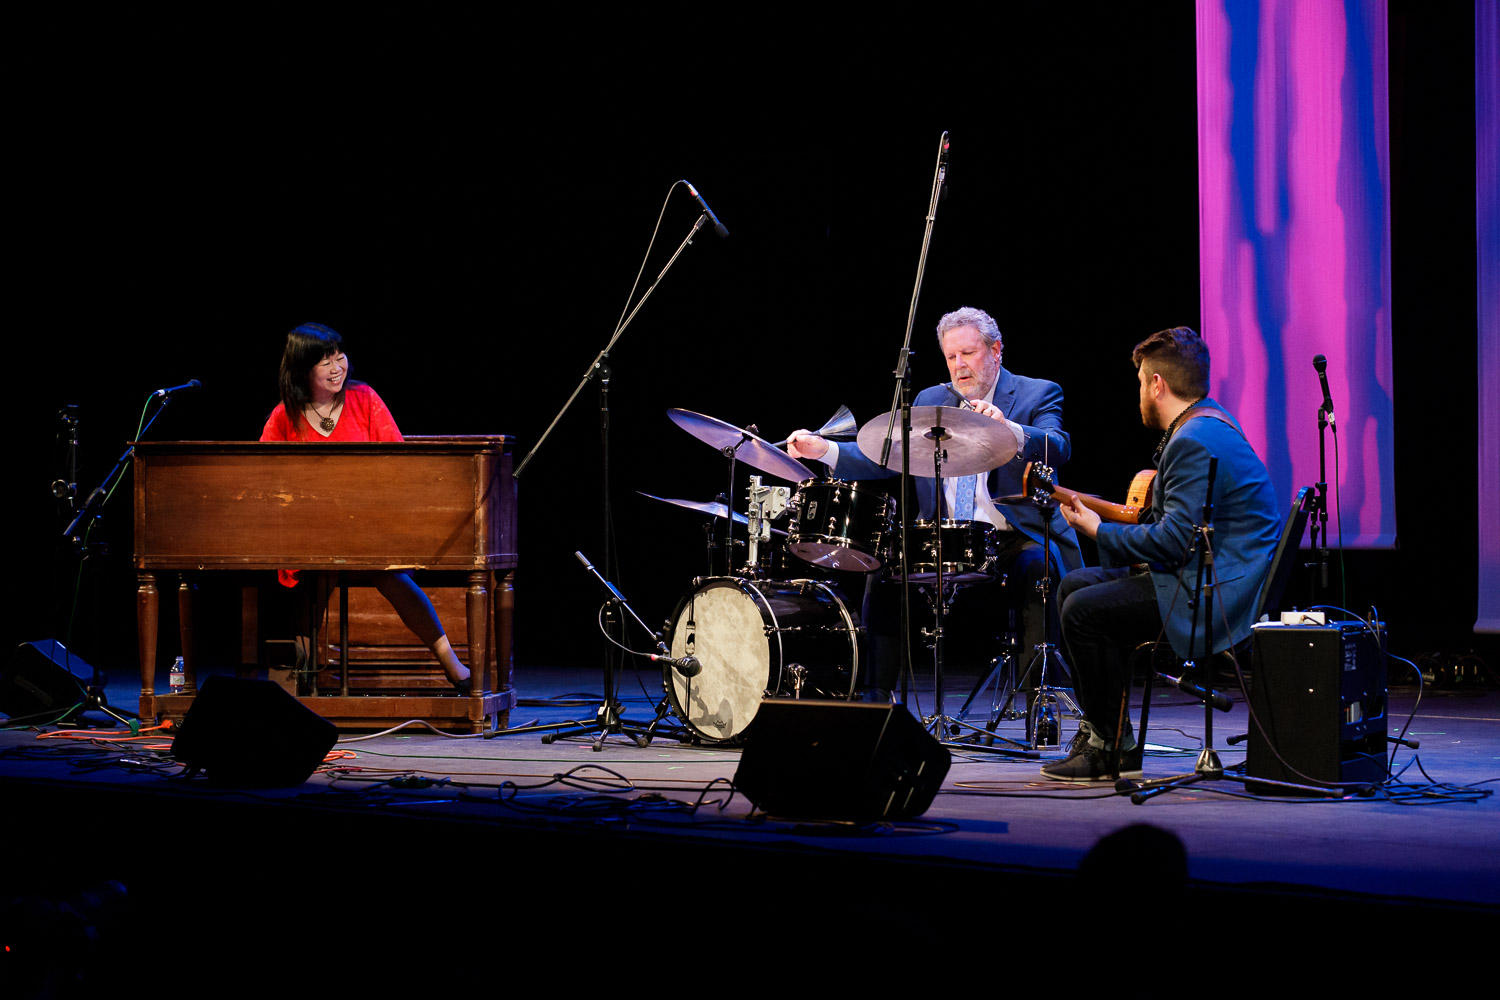 Jeff Hamilton, Akiko Tsuruga, and Graham Dechter Organ Trio performs on the Mainstage at 2019 Centrum Jazz Port Townsend.